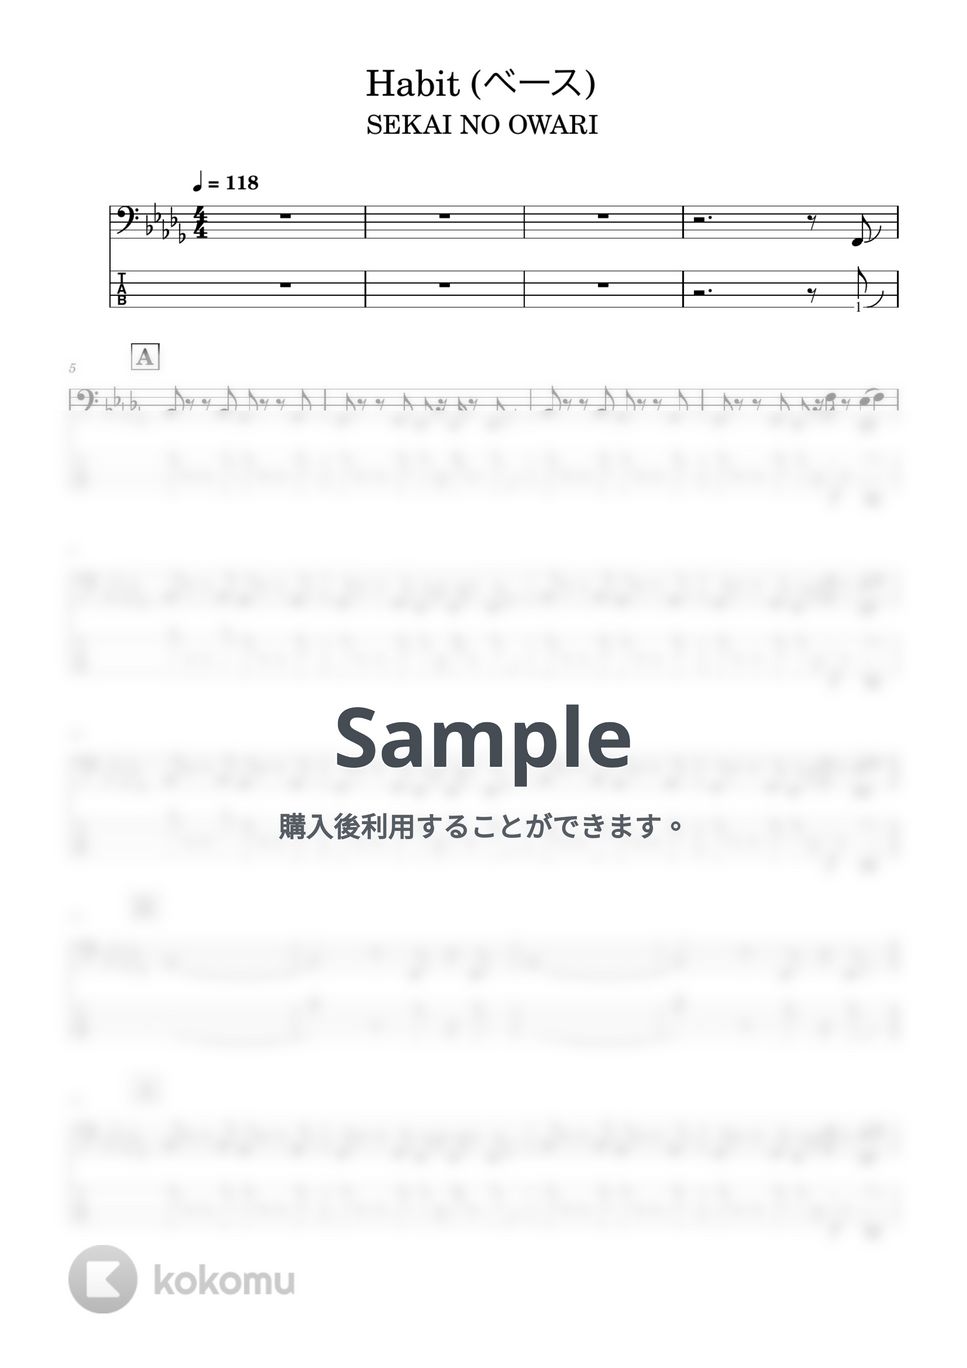 SEKAI NO OWARI - Habit (映画『ホリック xxxHOLiC』主題歌、ベース譜) by Kodai Hojo